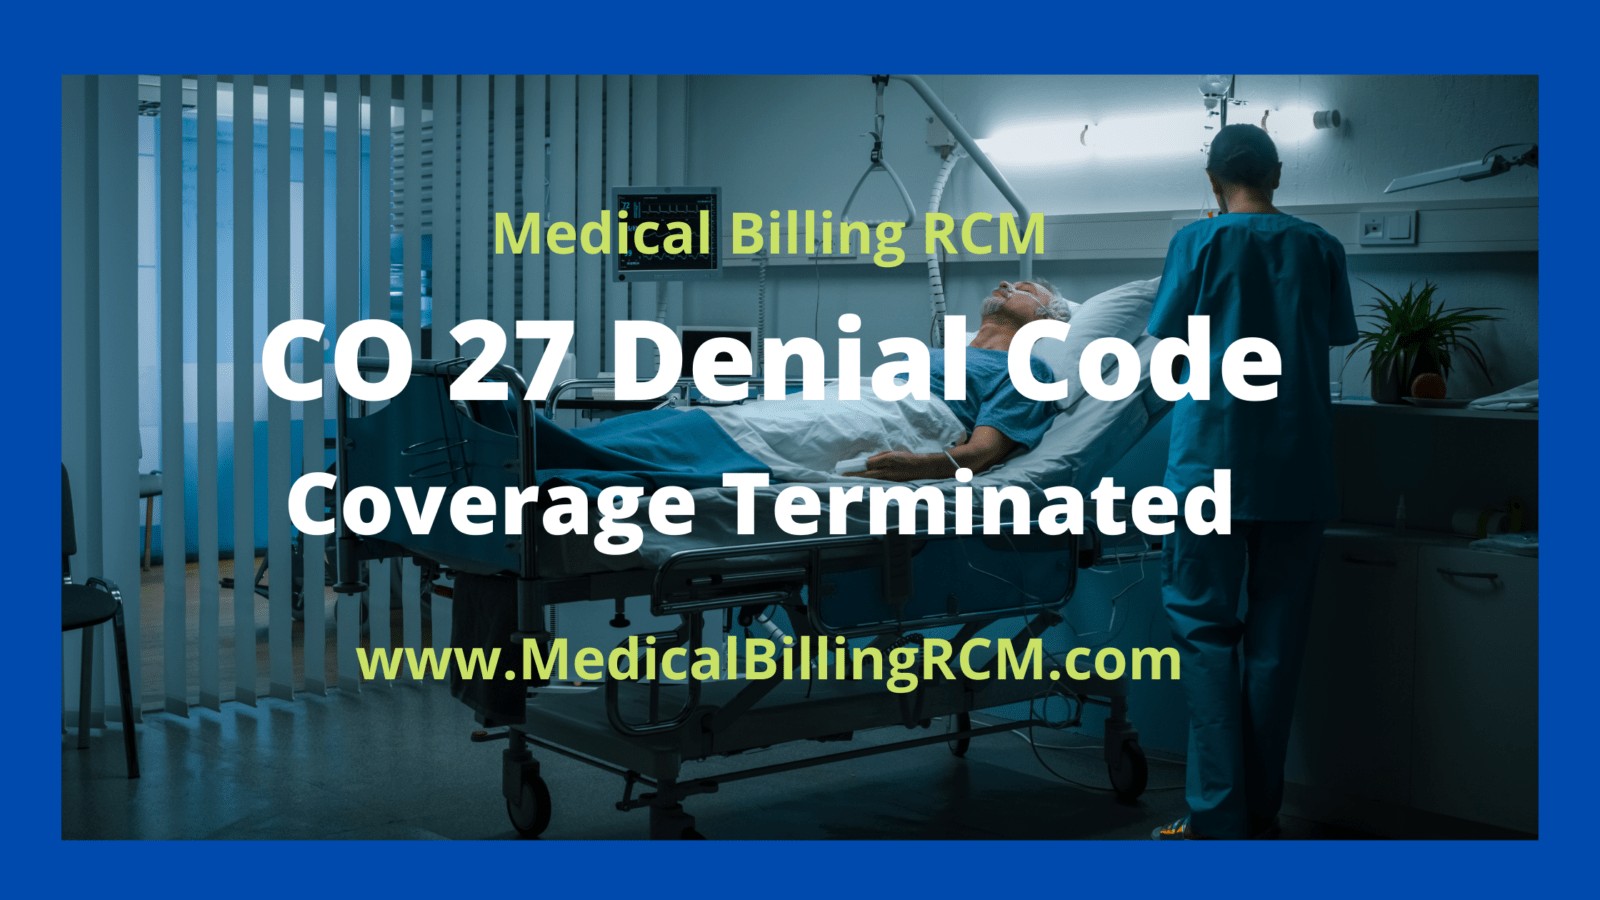 PR 27 denial code in medical billing